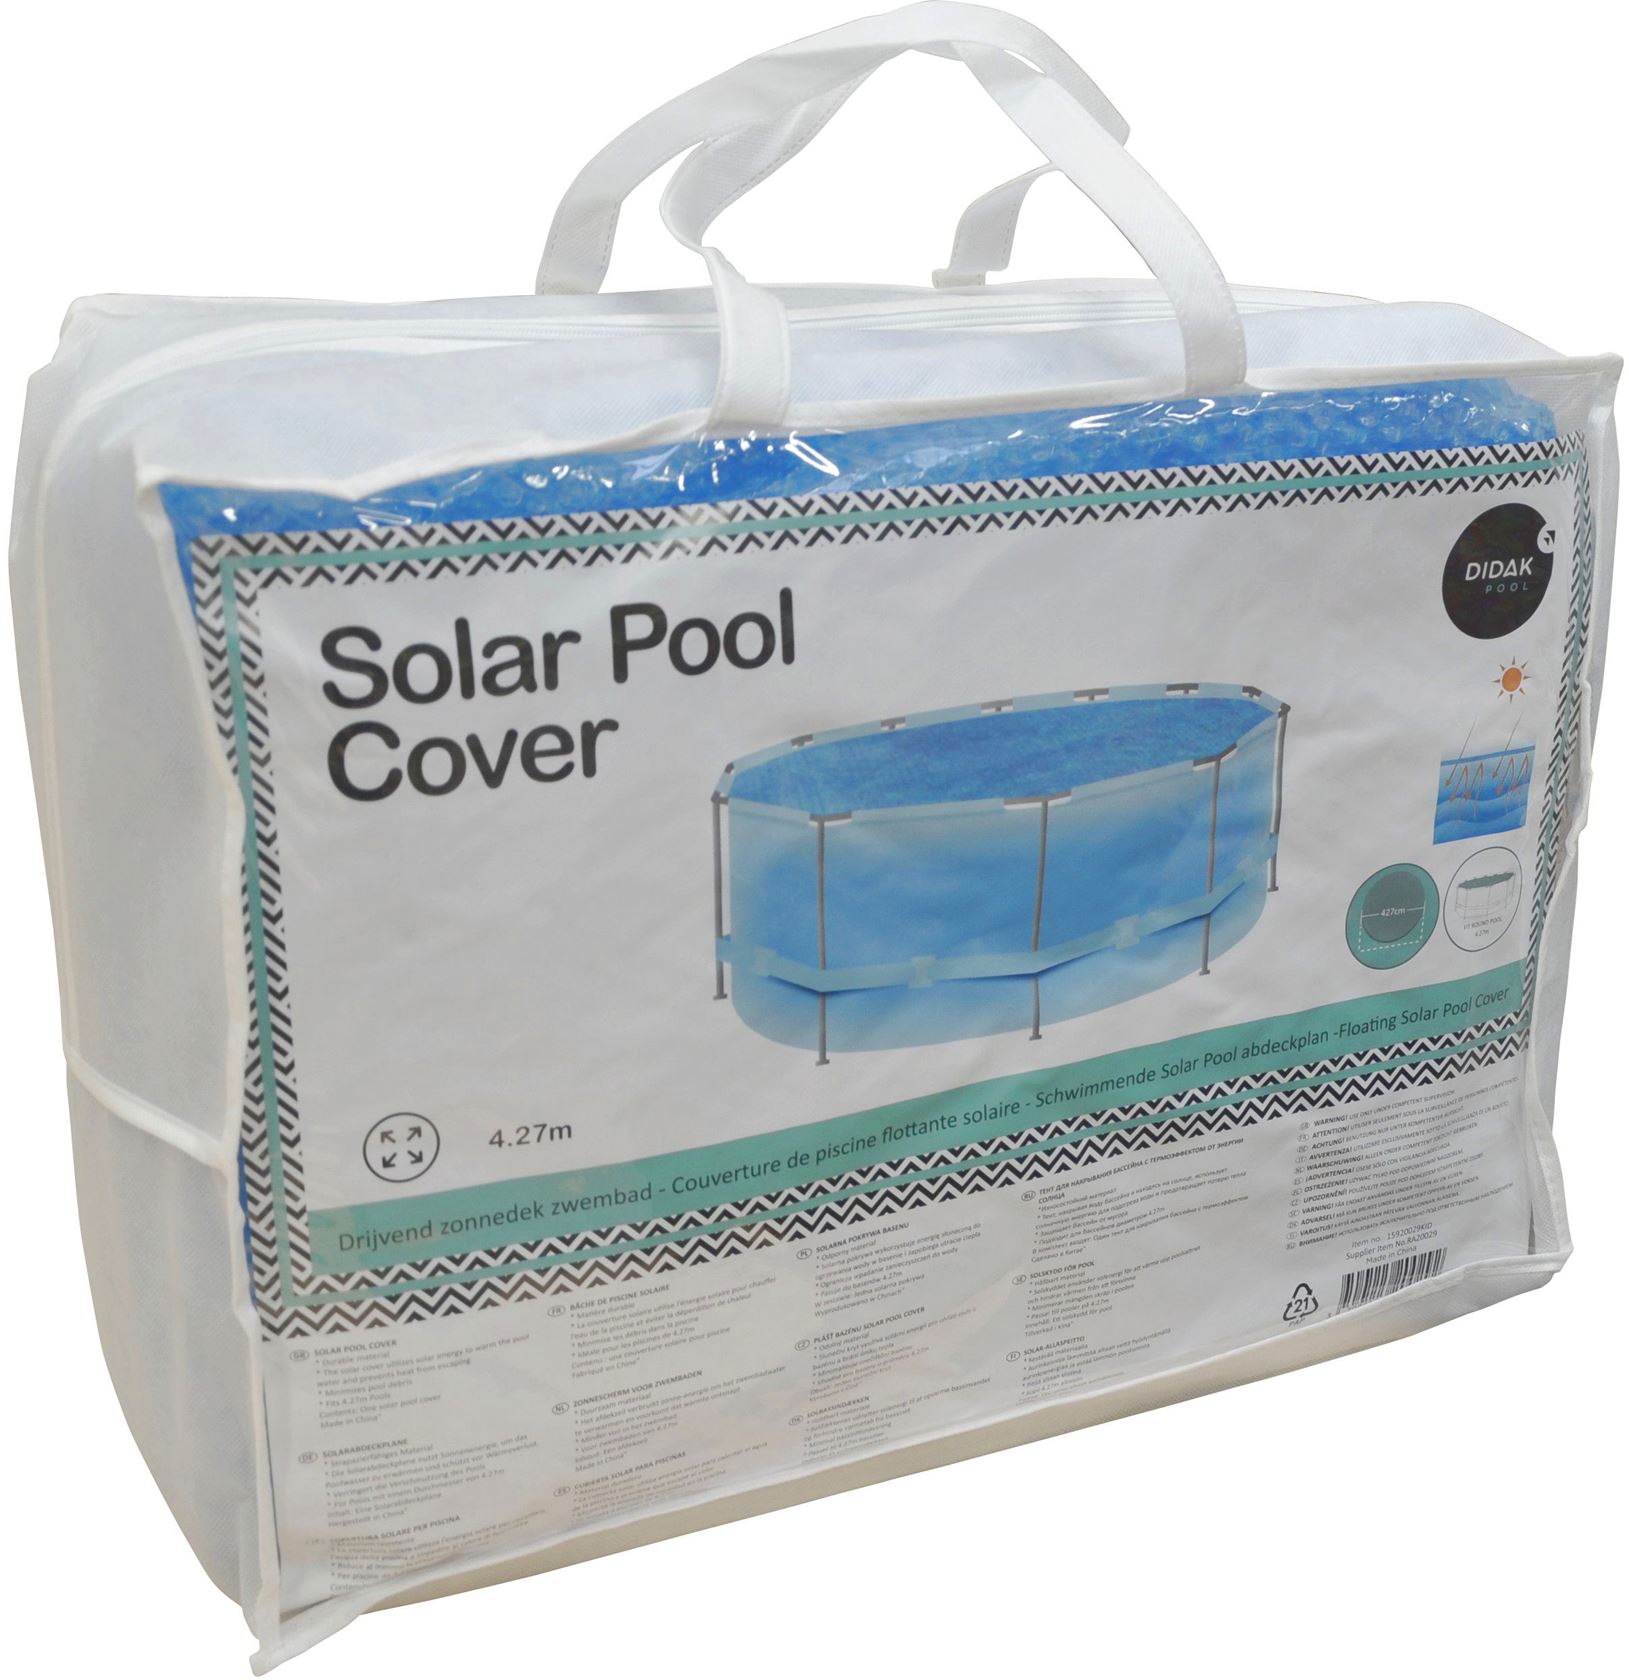 Solar-cover-rond-Didak-Pool-4-27m